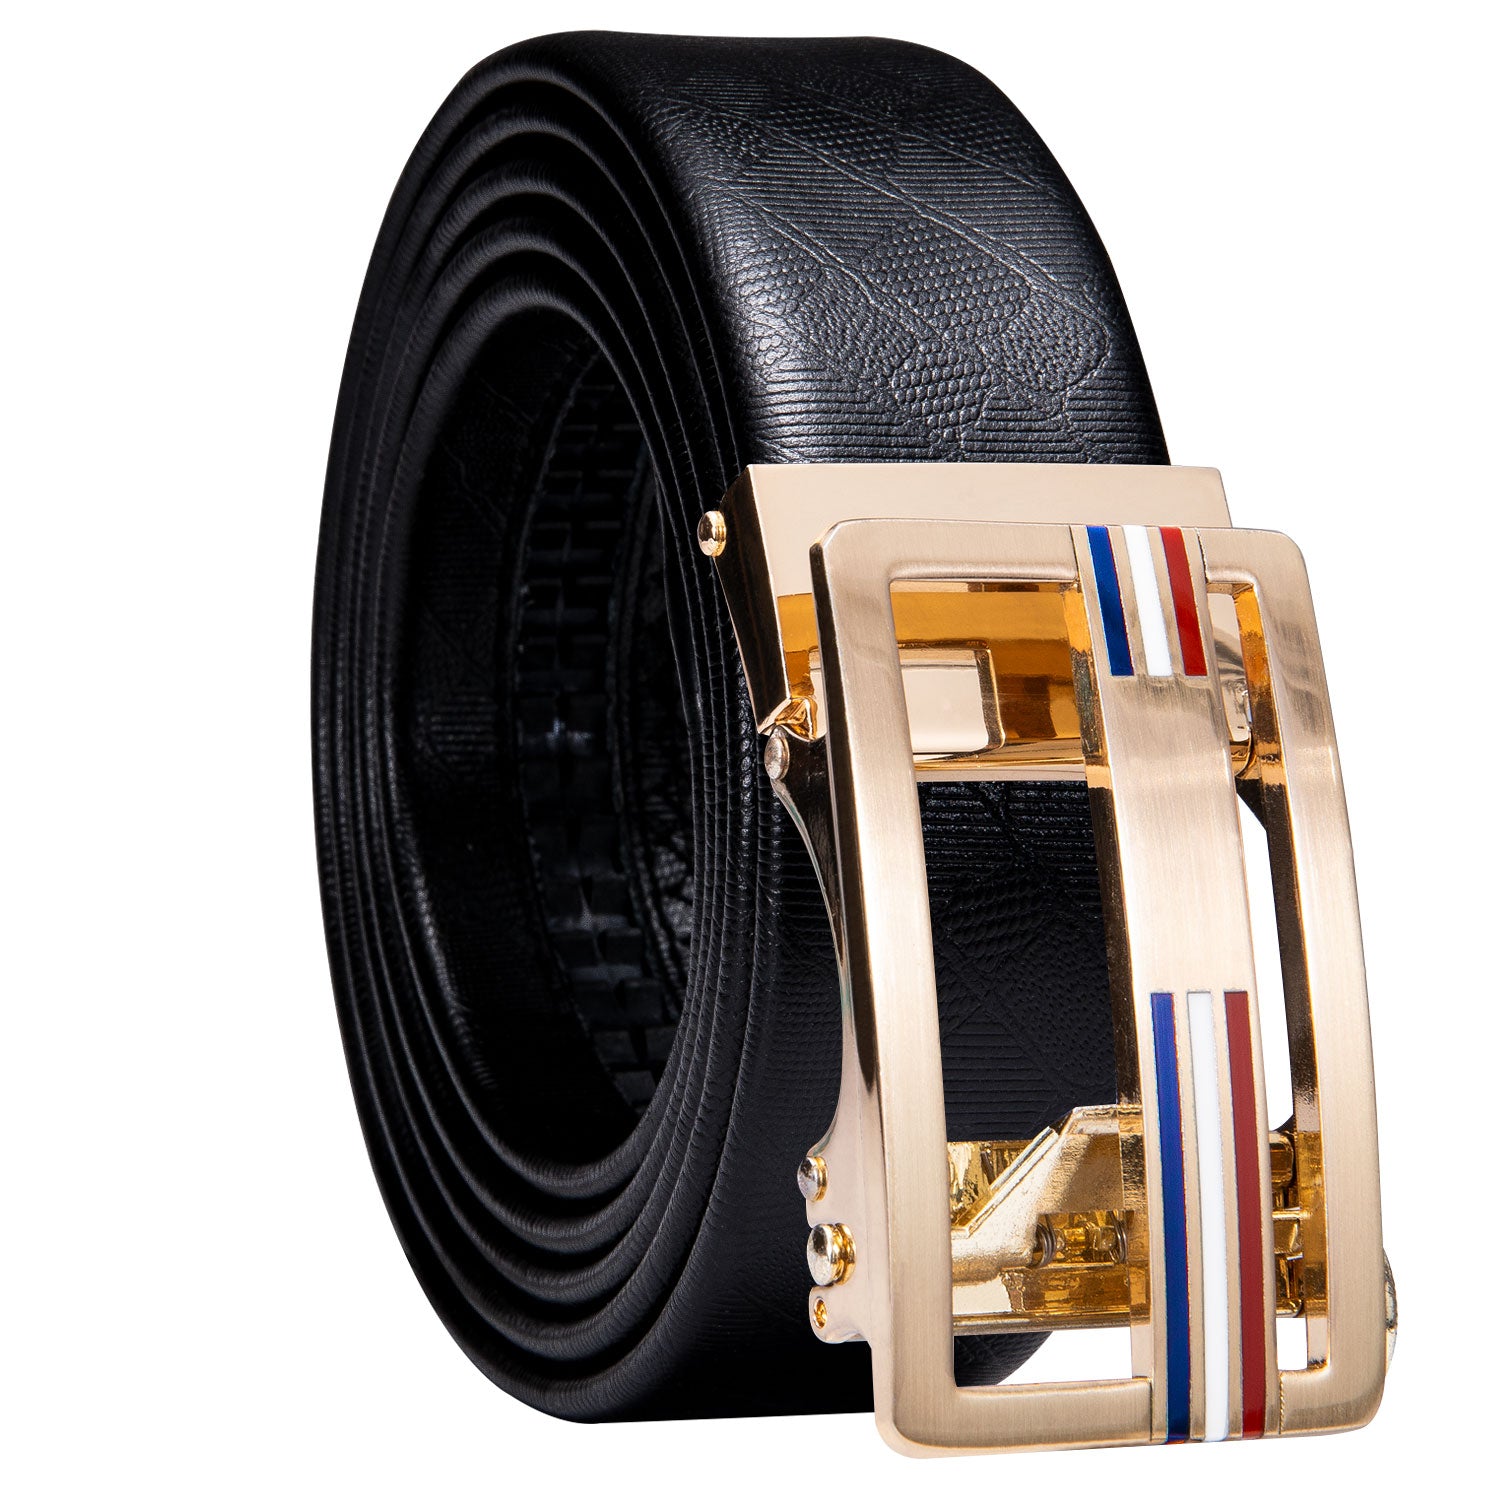 New Gold Watch Design Genuine Leather Belt